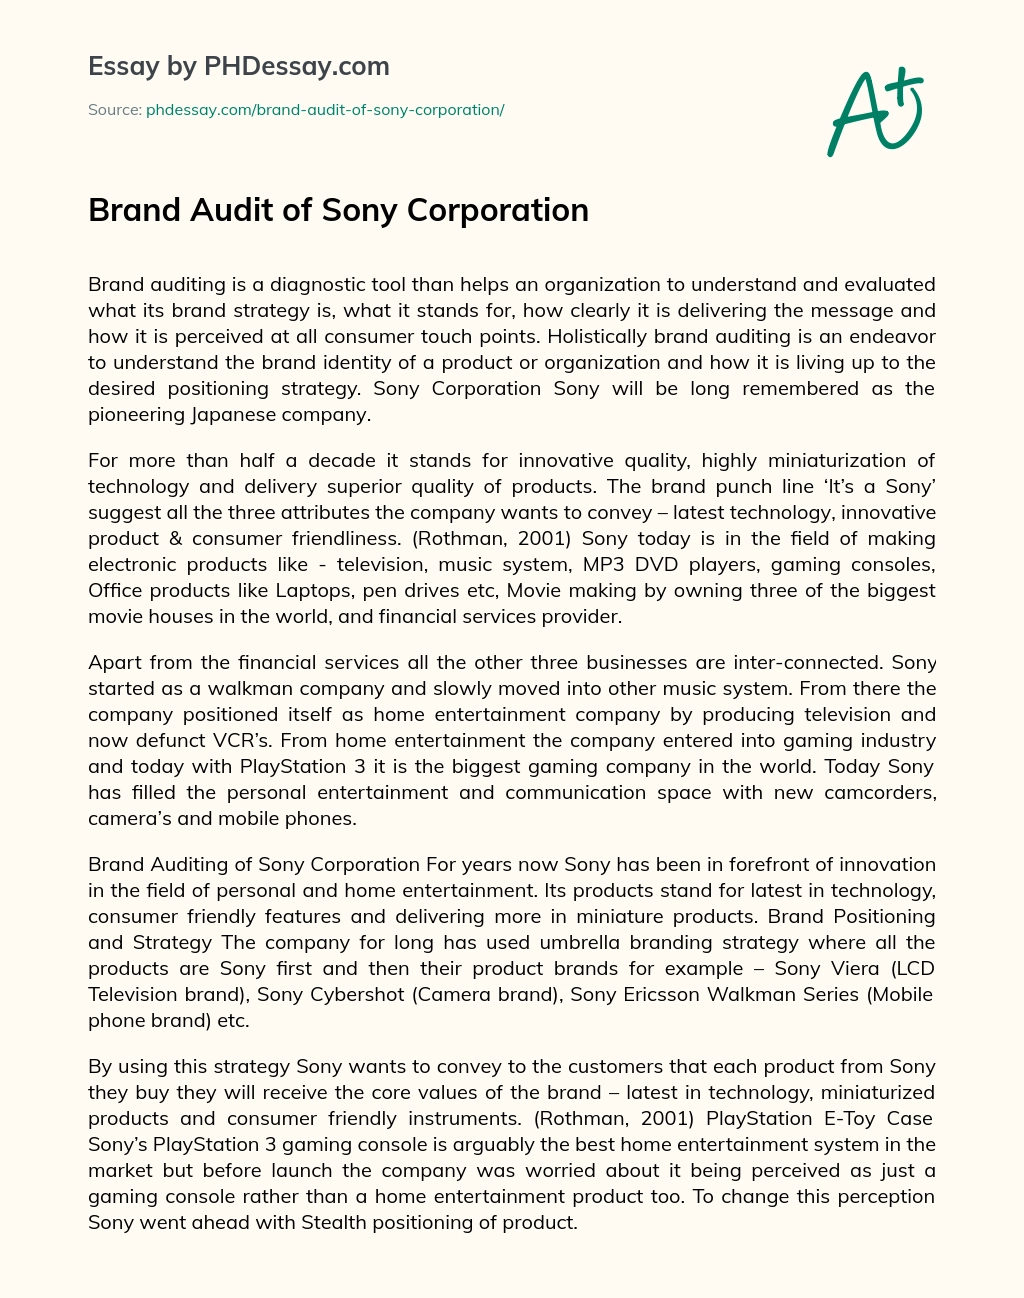 Brand Audit of Sony Corporation essay